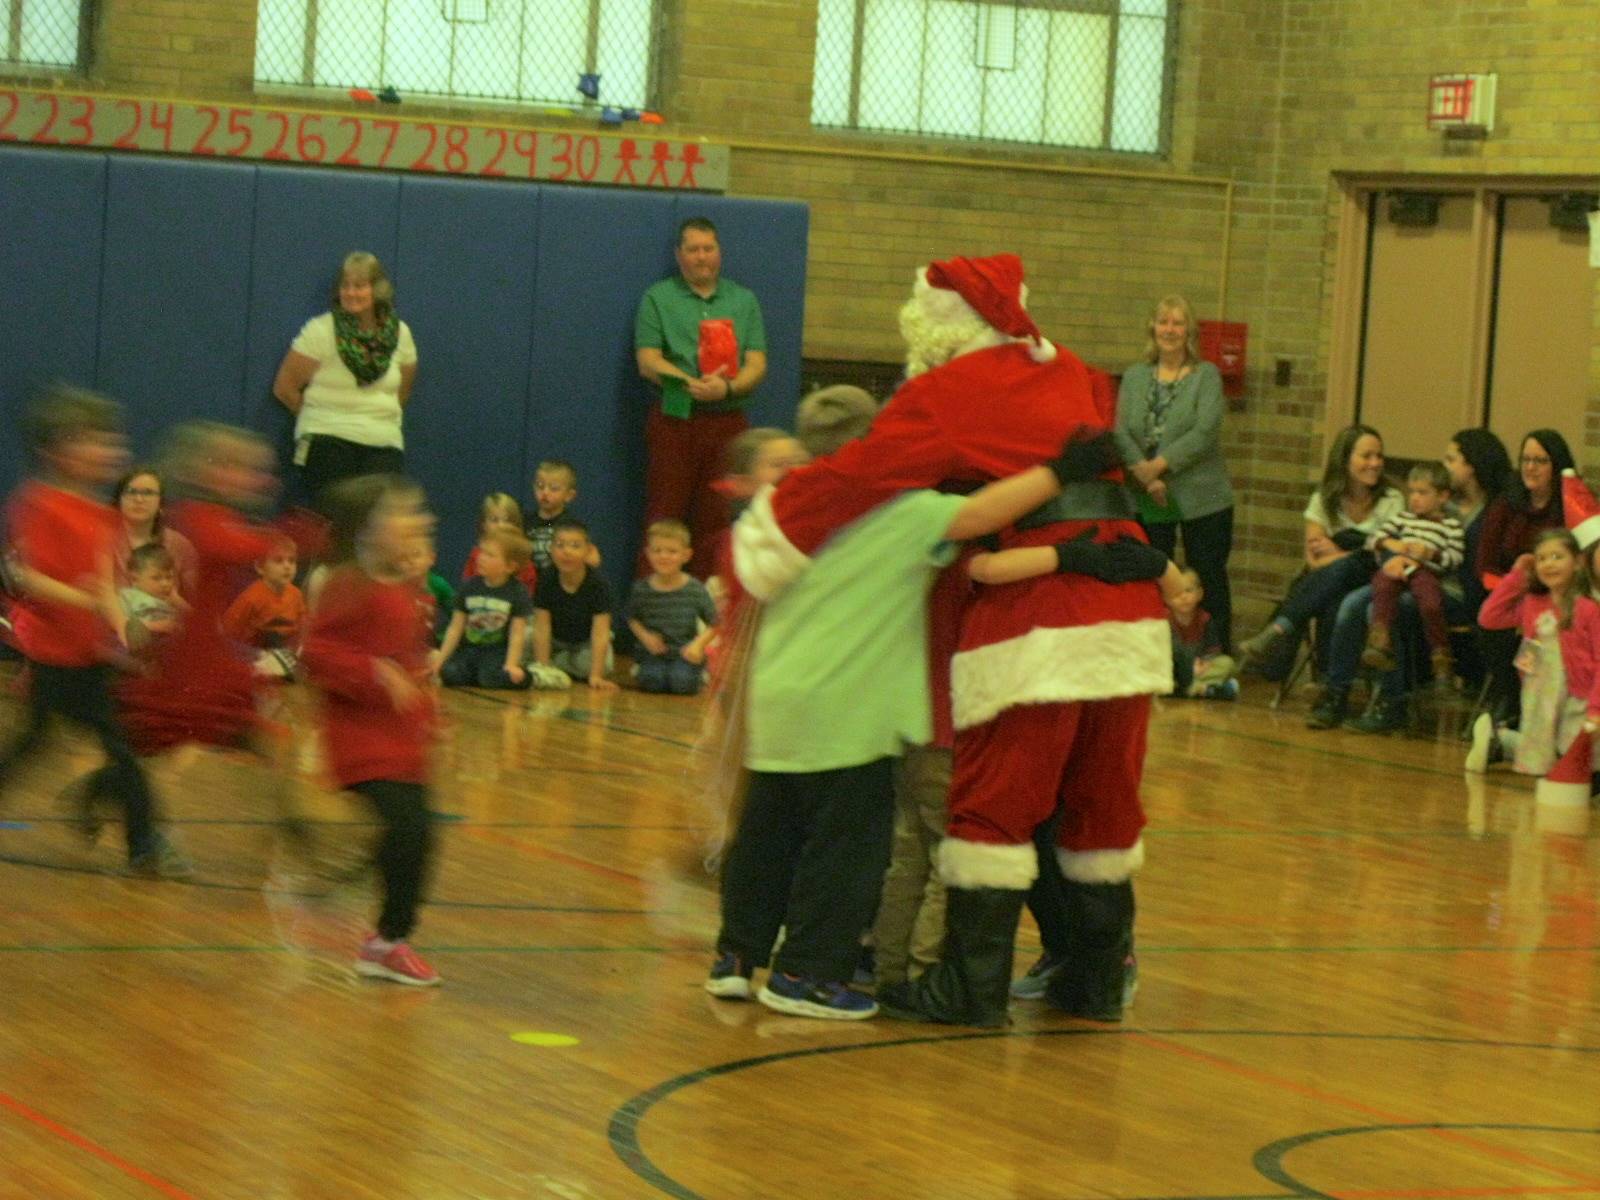 Santa gets a group hug from students.